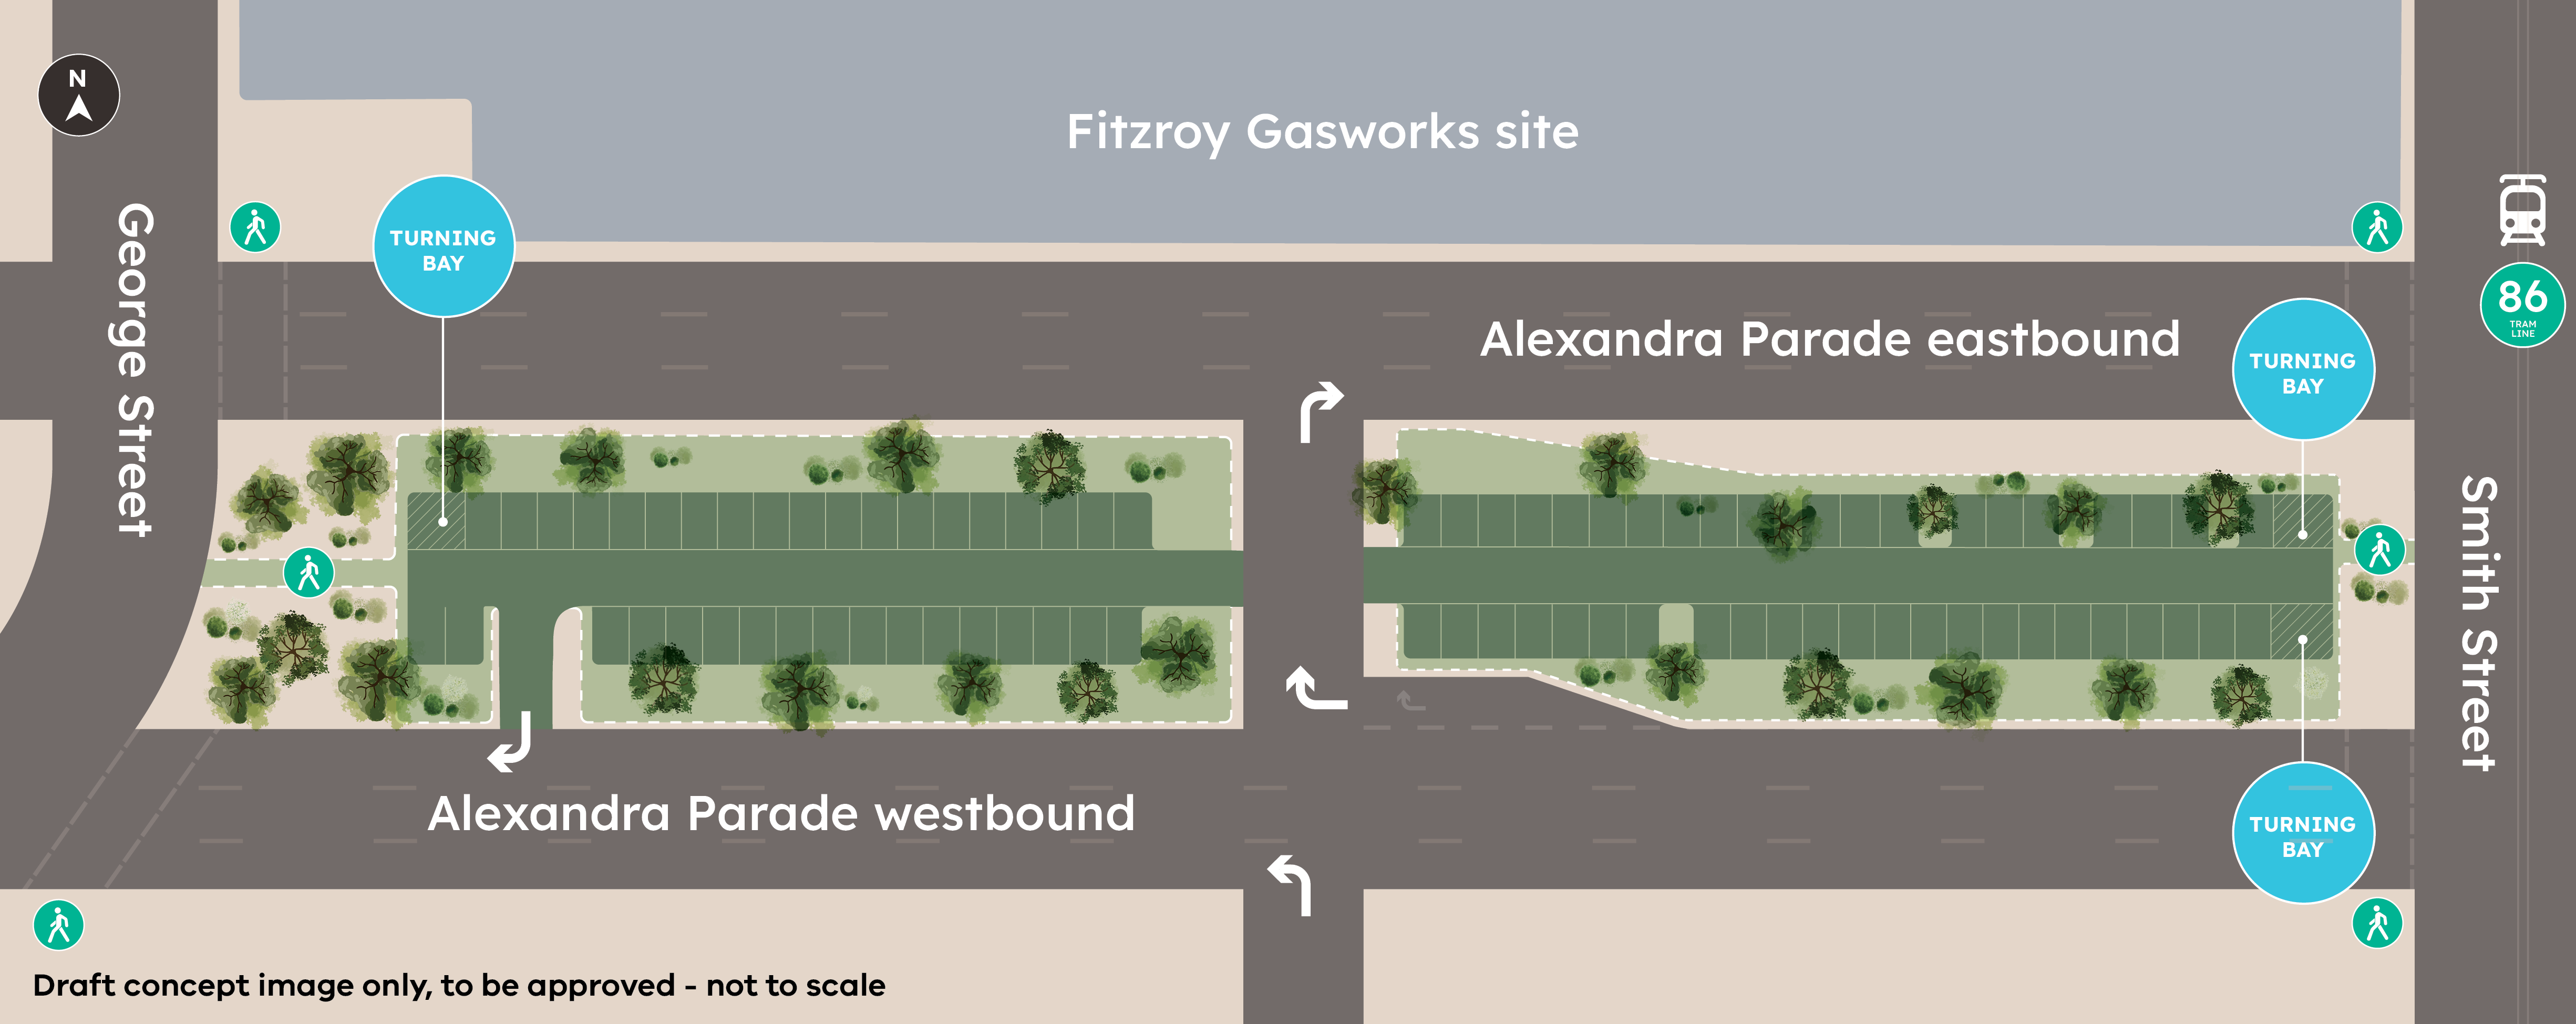 Fitzroy Gasworks Car park proposal image - form